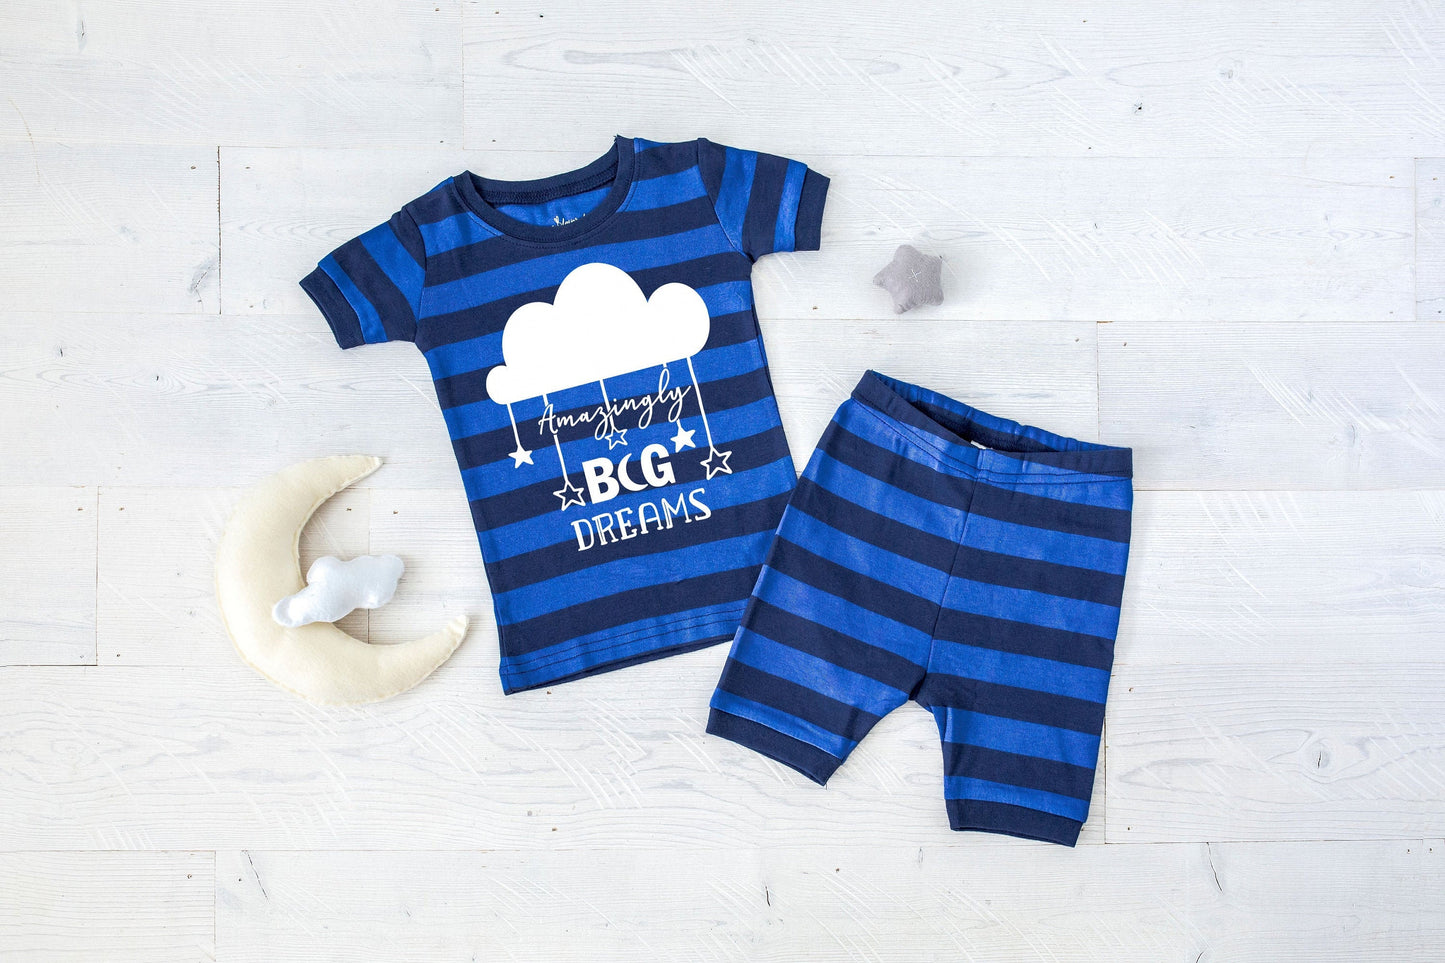 Dream Amazingly Big Dreams Blue Striped Shorts Toddler and Youth Pajamas - Boys Pajamas - Sleepover Pajamas - Toddler Boy Summer Pajamas